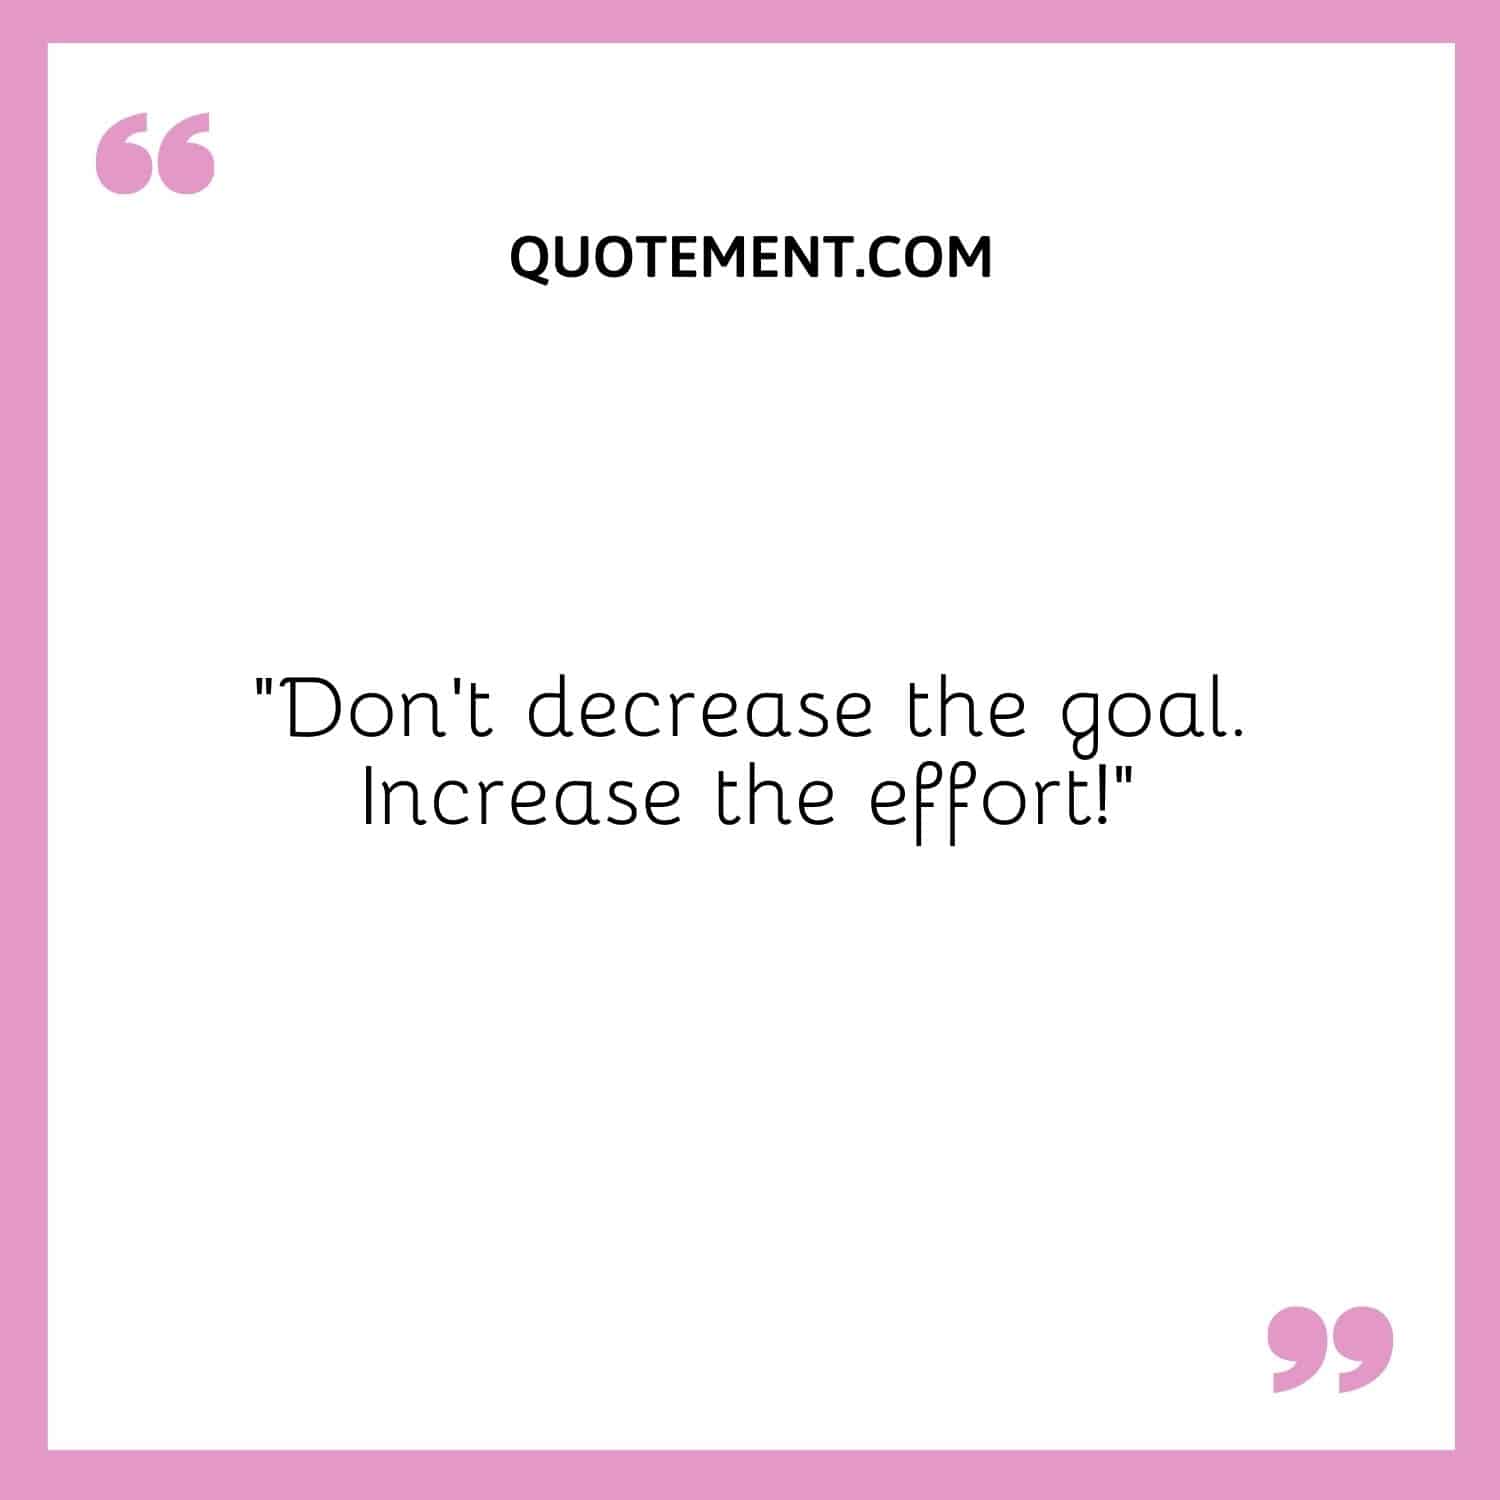 “Don’t decrease the goal. Increase the effort!“